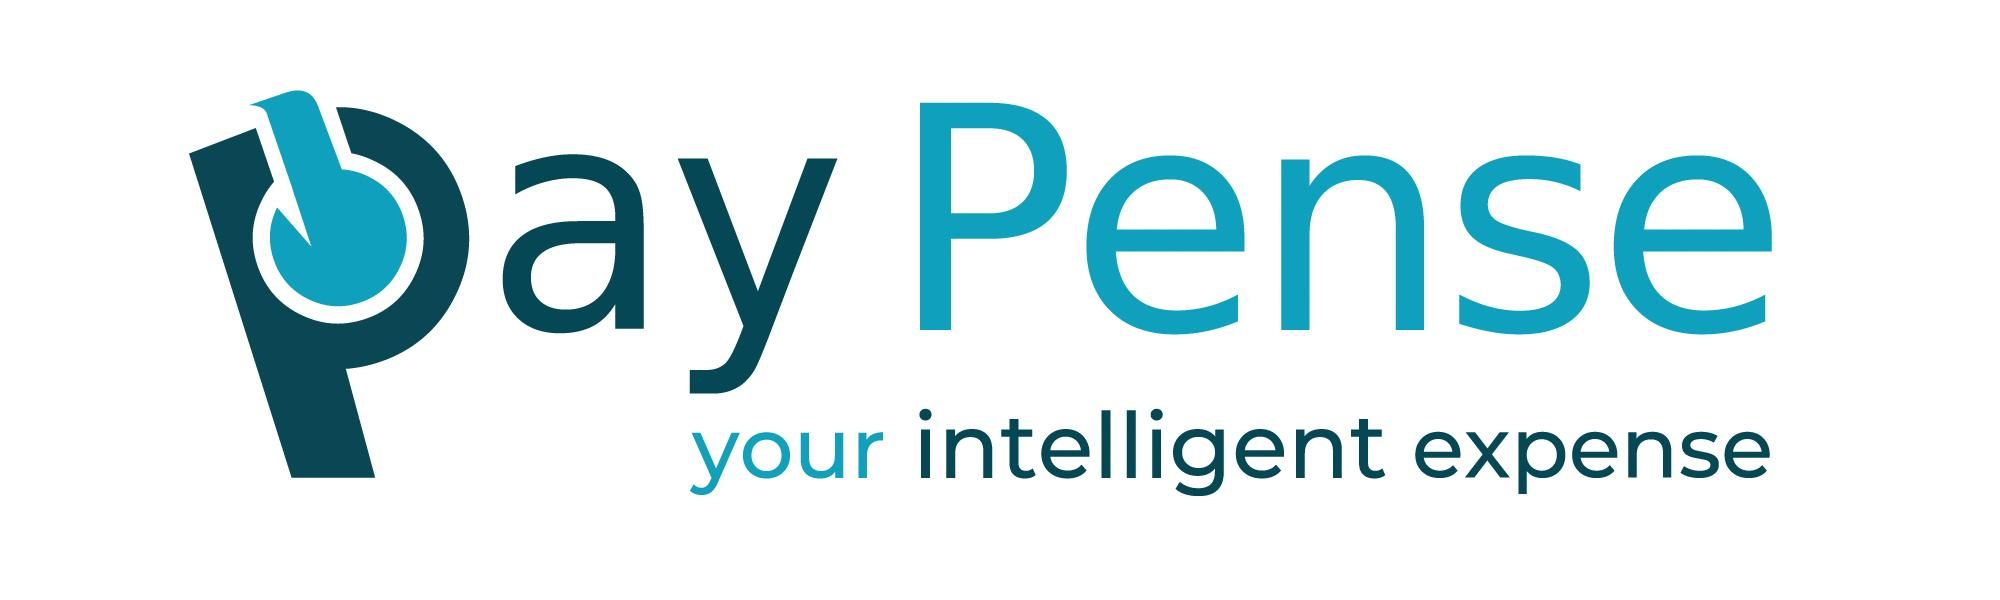 PayPense logo 2